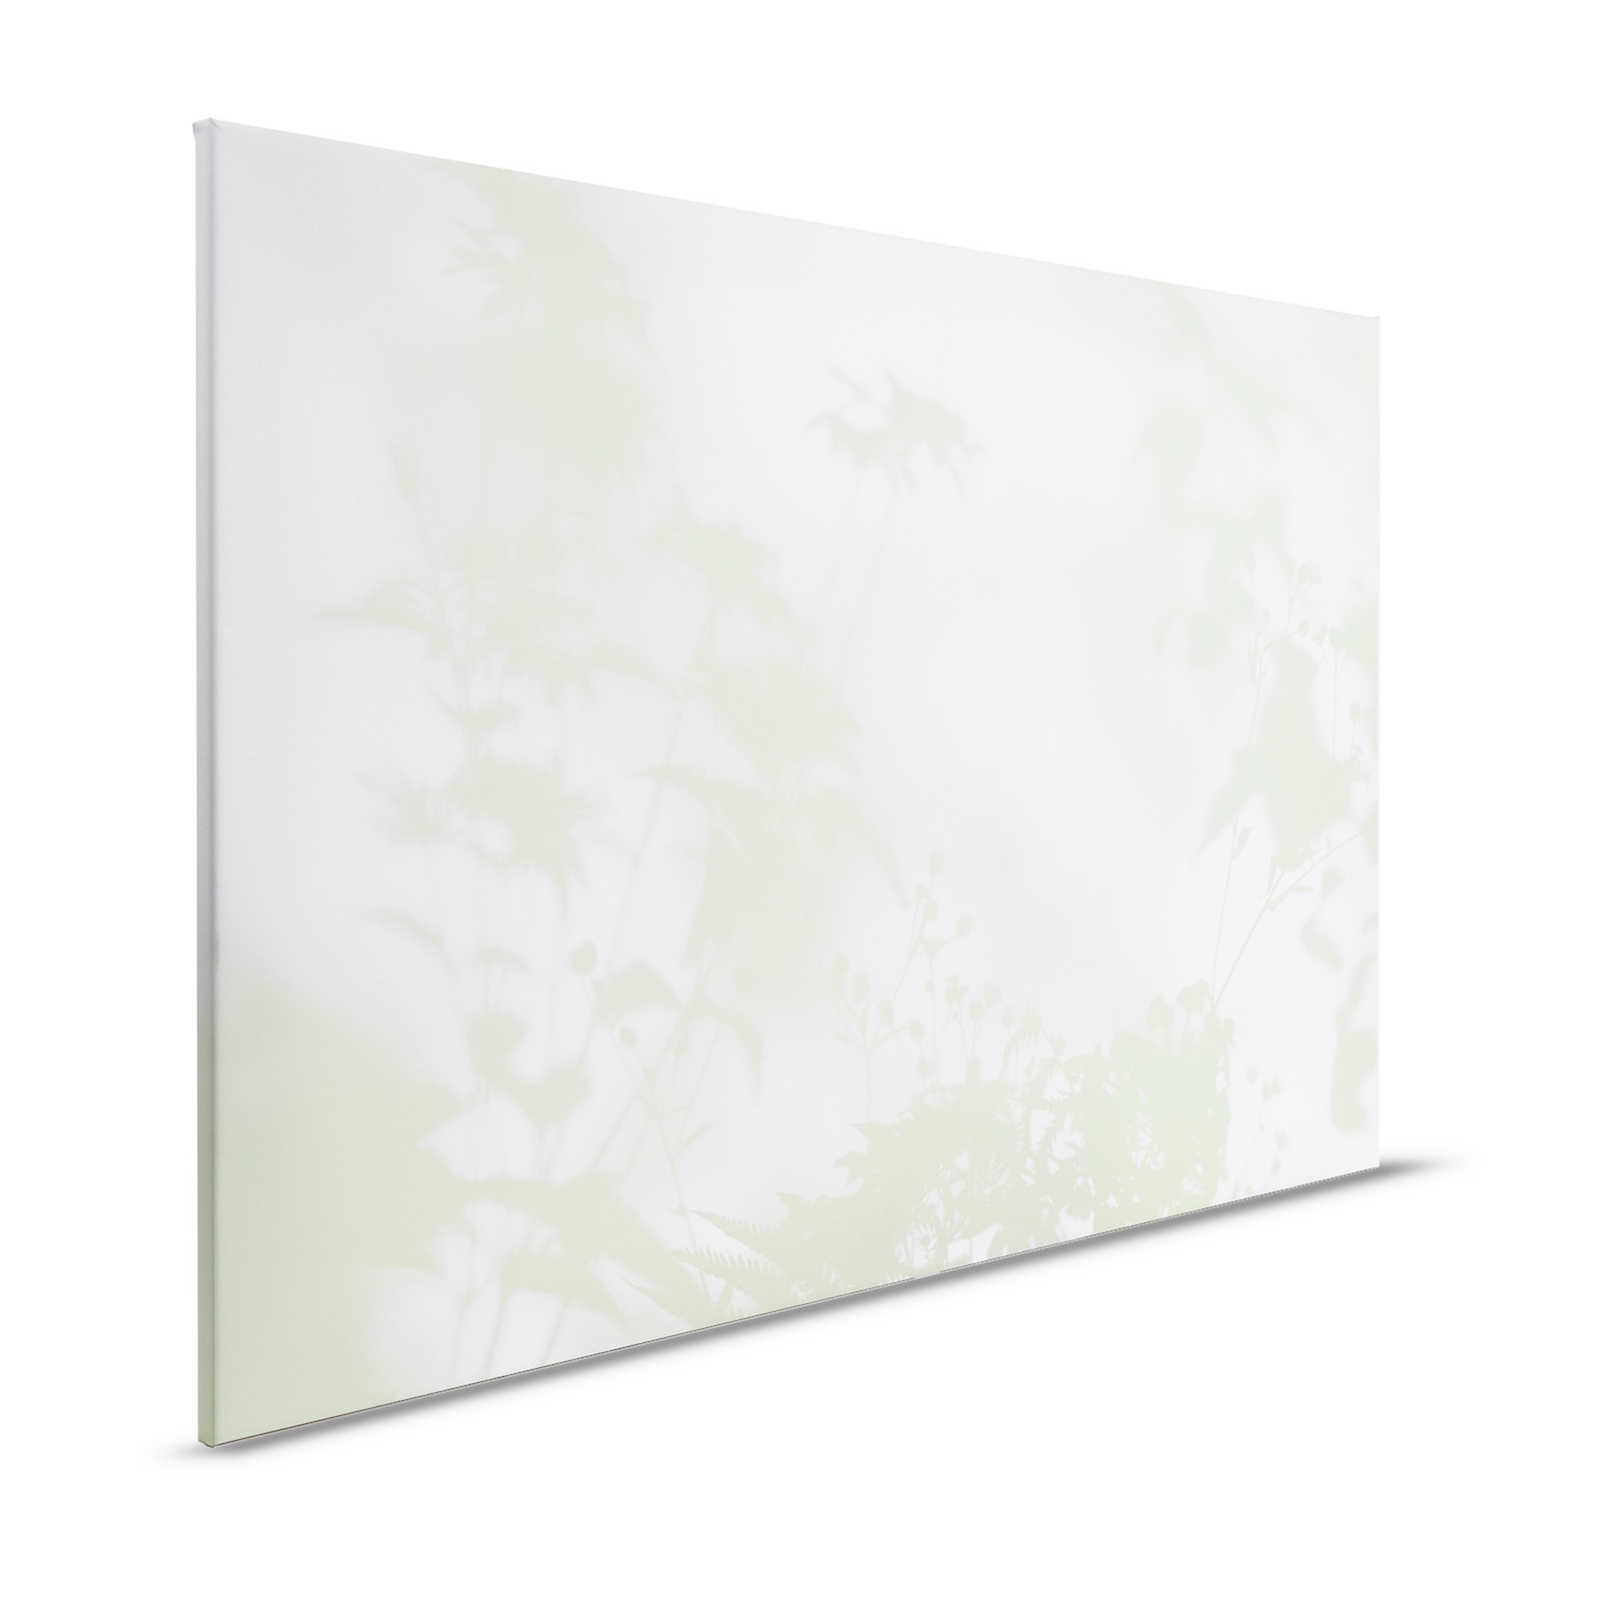 Camera d'ombra 3 - Pittura su tela naturale verde e bianca, disegno sbiadito - 1,20 m x 0,80 m
